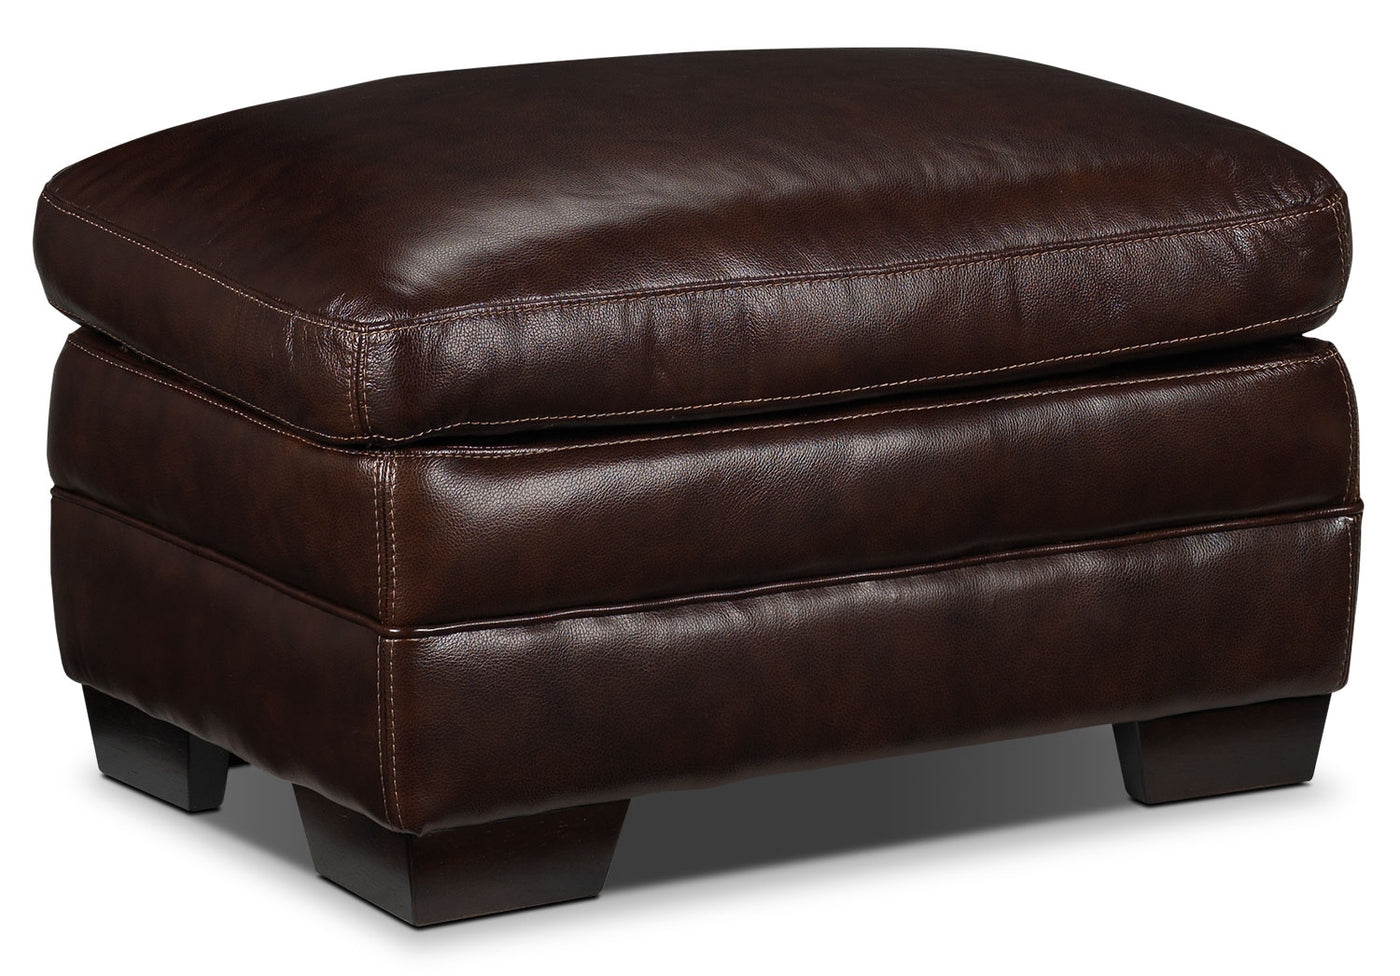 Amarillo Leather Ottoman - Brown